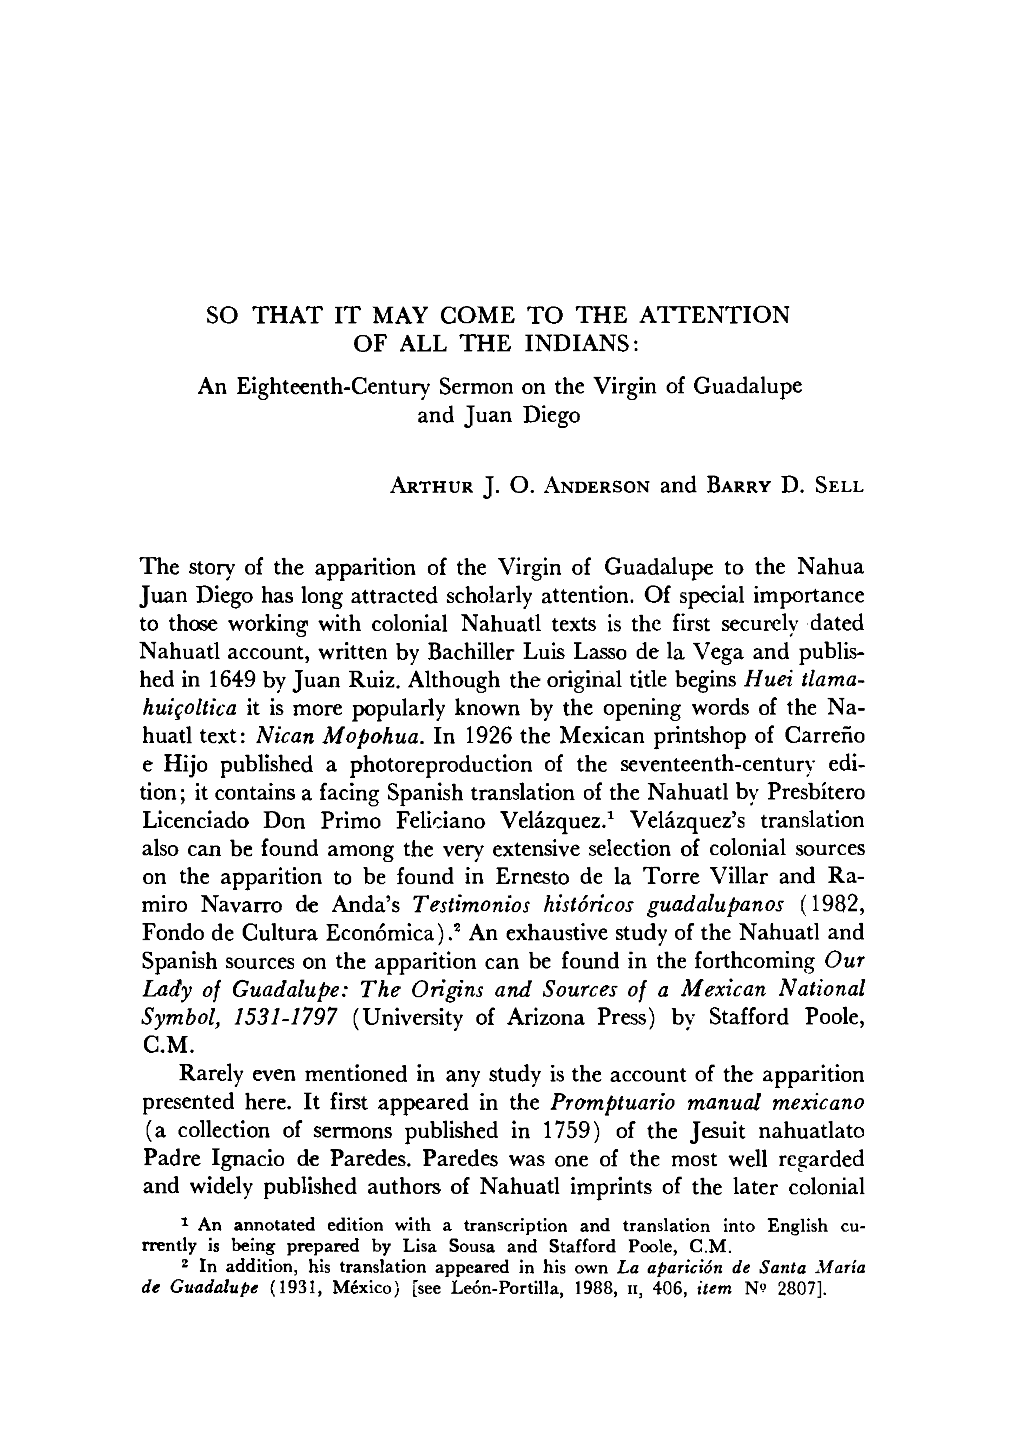 An Eighteenth-Century Sermon on the Virgin Oí Guadalupe and Juan Diego